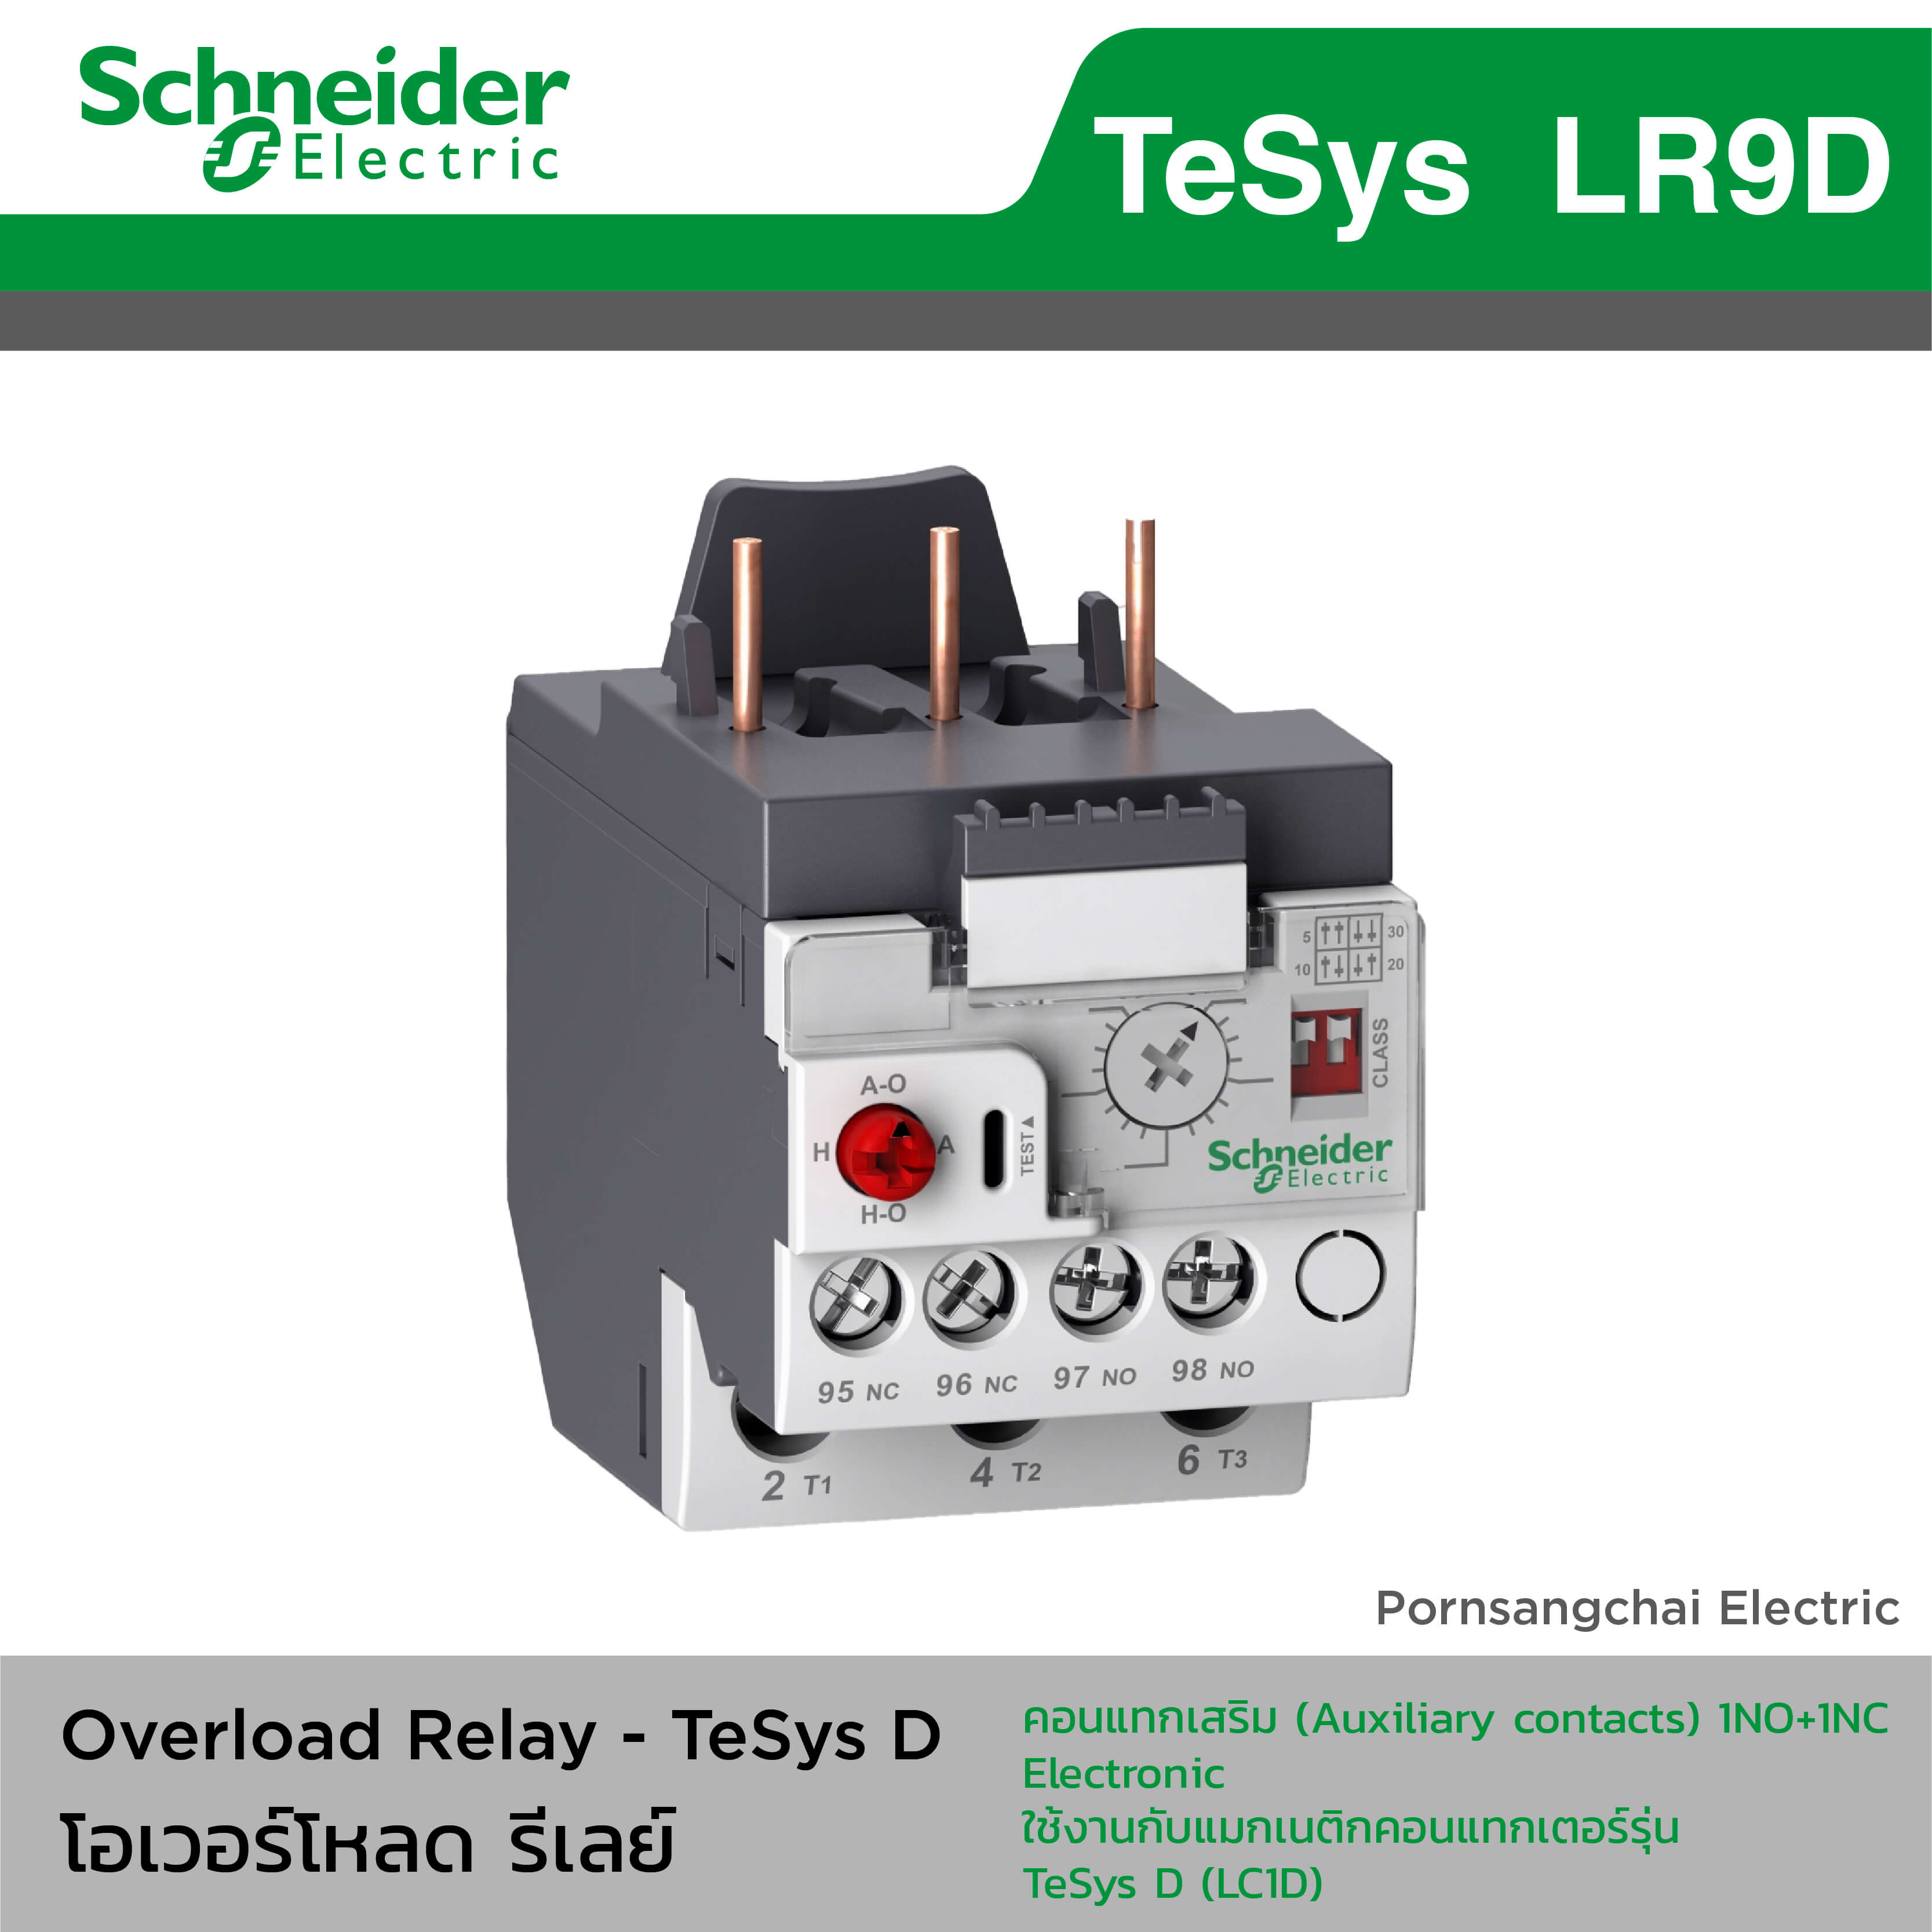 Schneider (Overload Relay) โอเวอร์โหลดรีเลย์ - TeSys LR9D